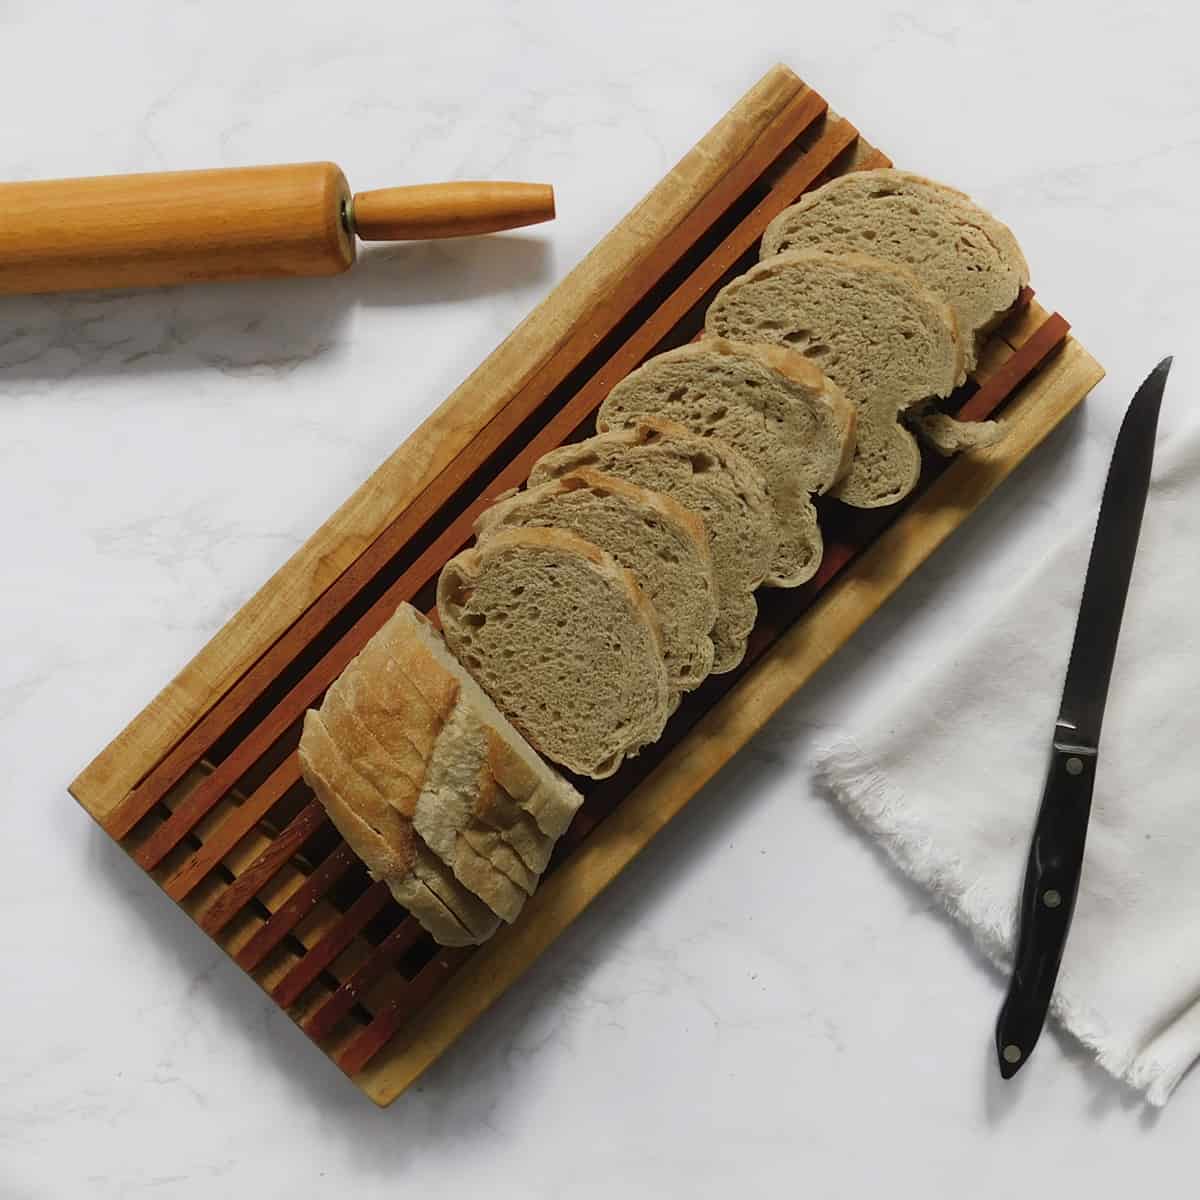 Bread Cutting Board with Crumb Catcher